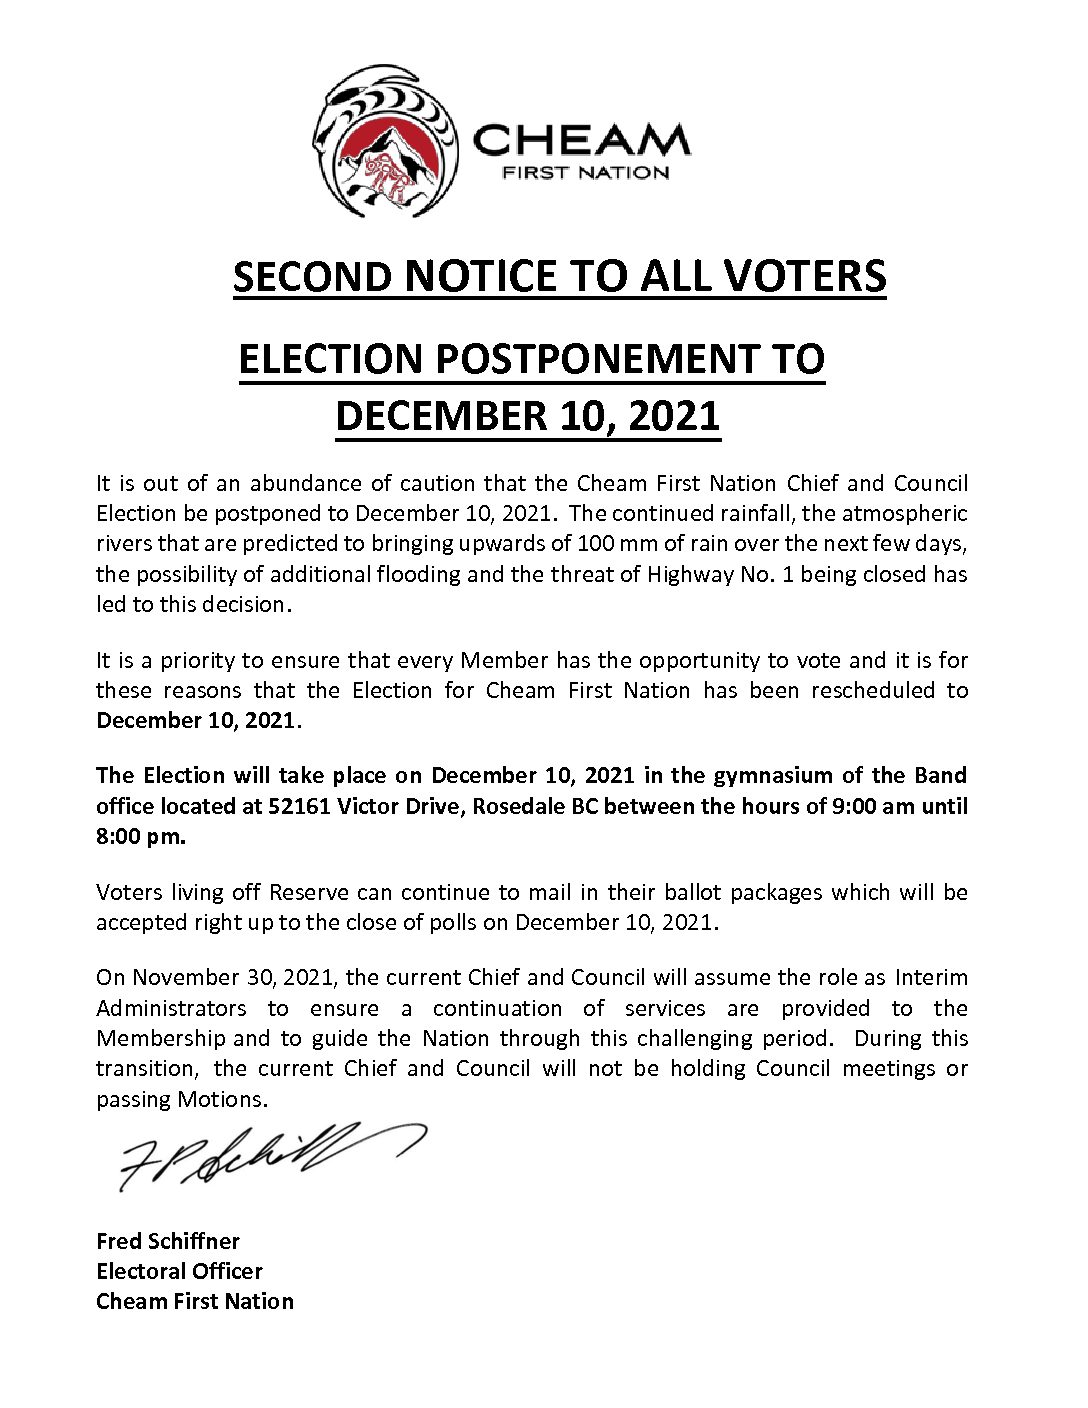 Urgent Notice: Election Postponed to December 10